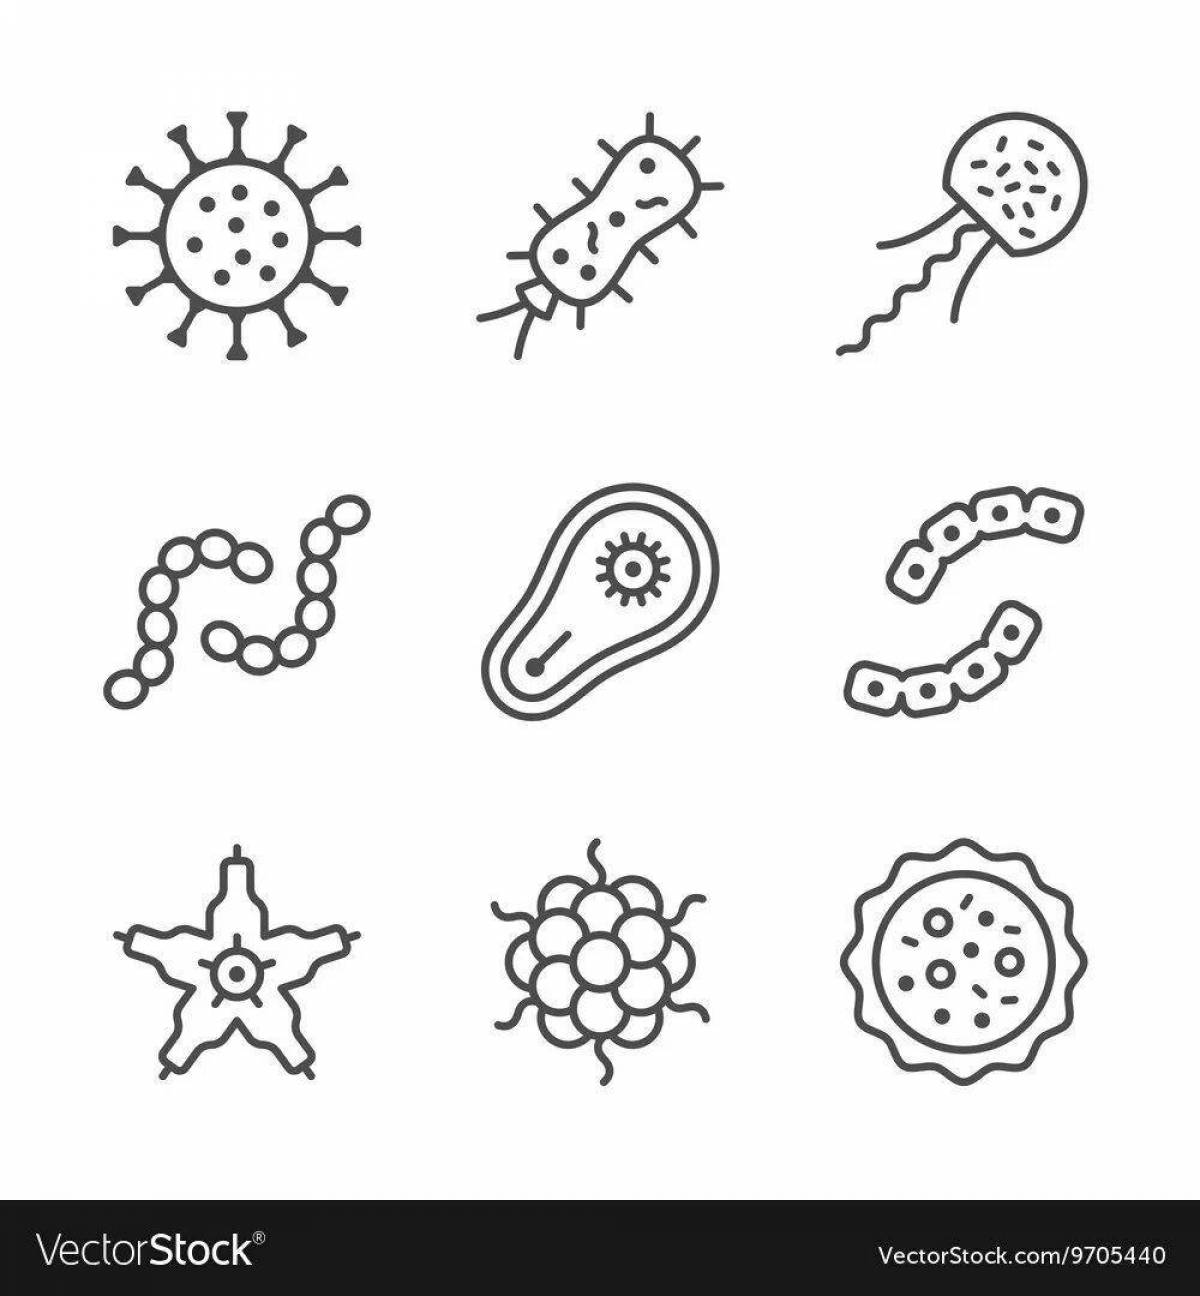 Fun bacteria coloring page